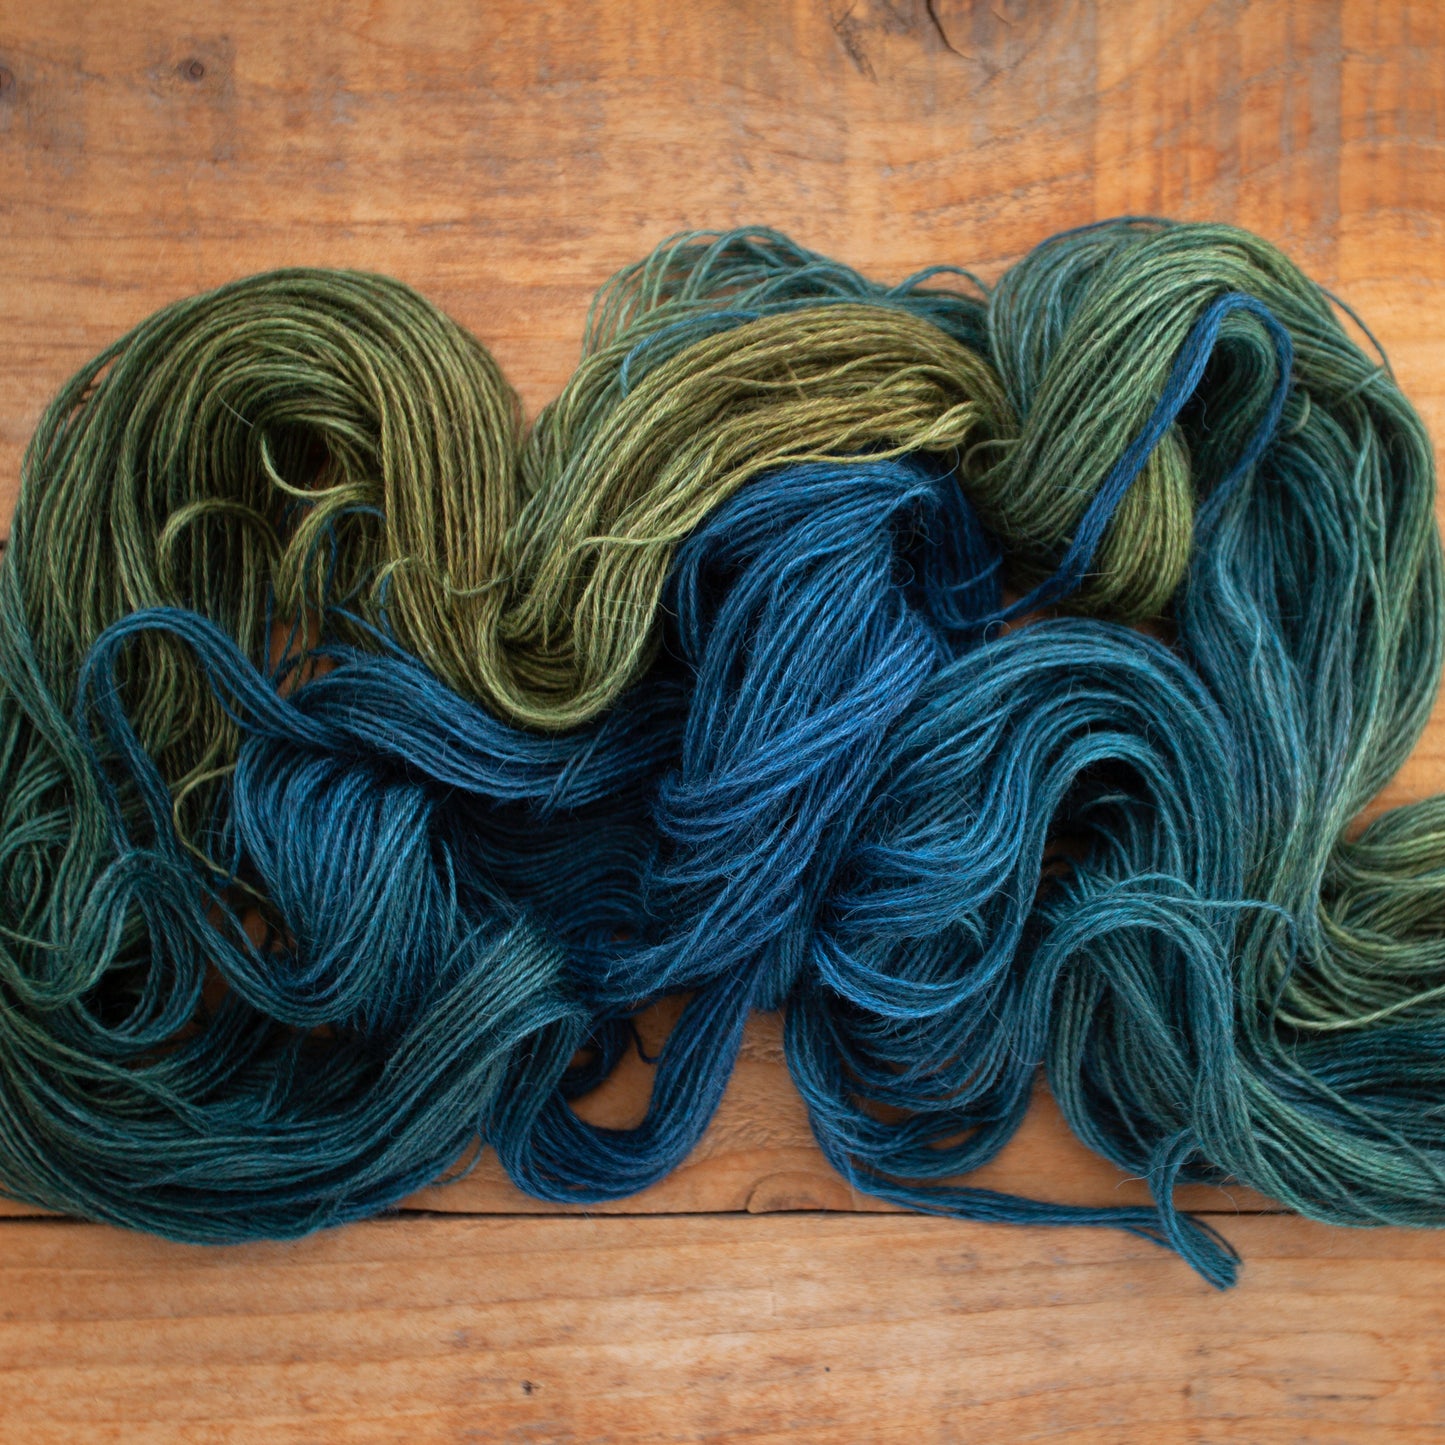 100% Baby Llama hand dyed yarn - Marine blue/teal/green - ready to ship